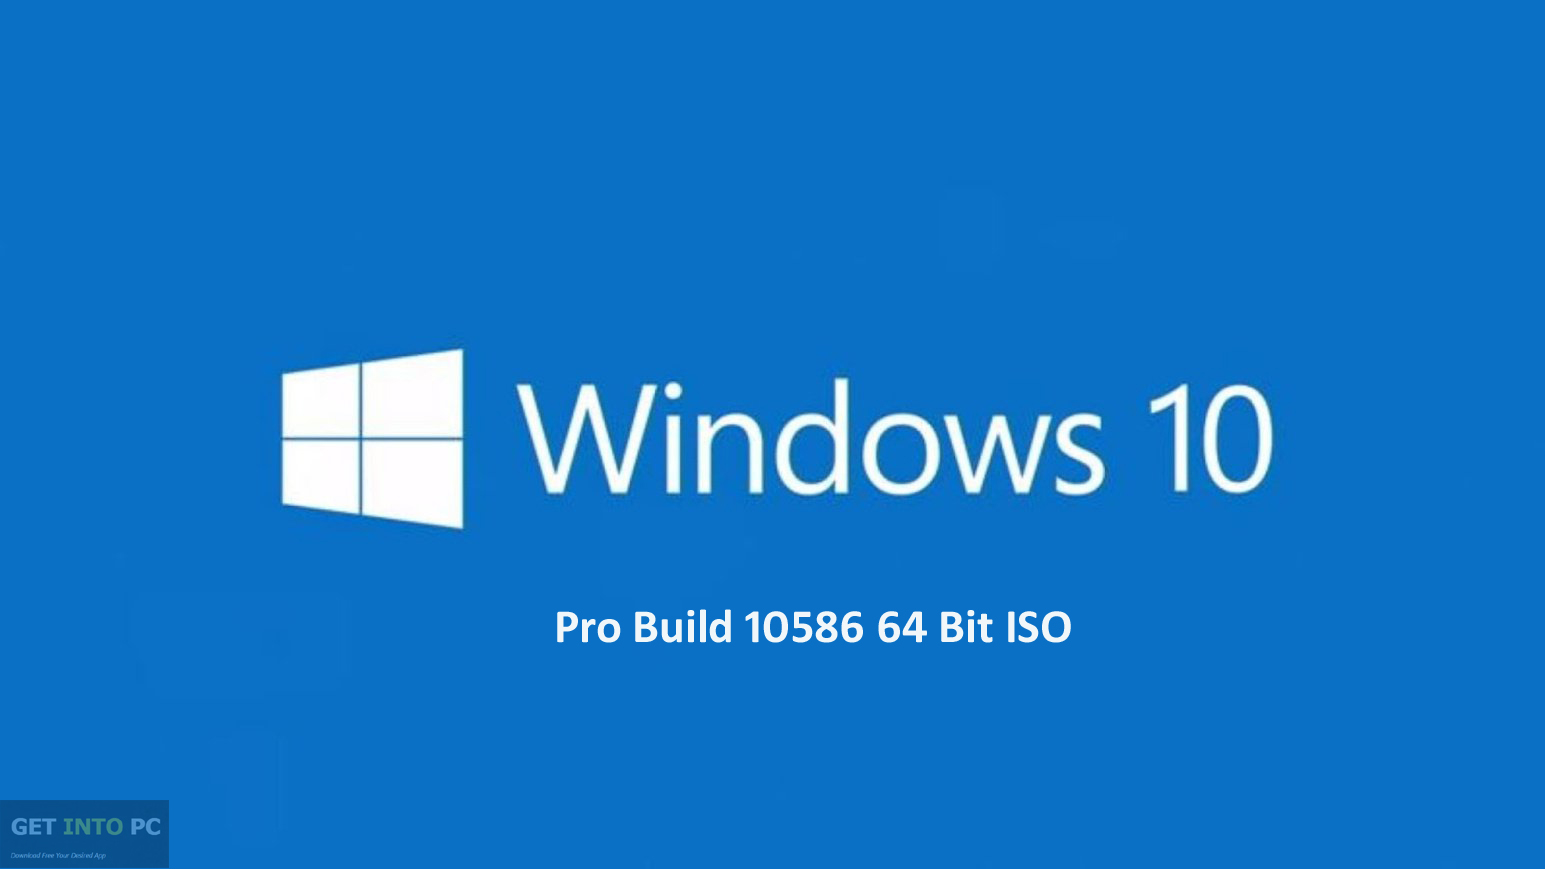 Windows 10 wimboot iso